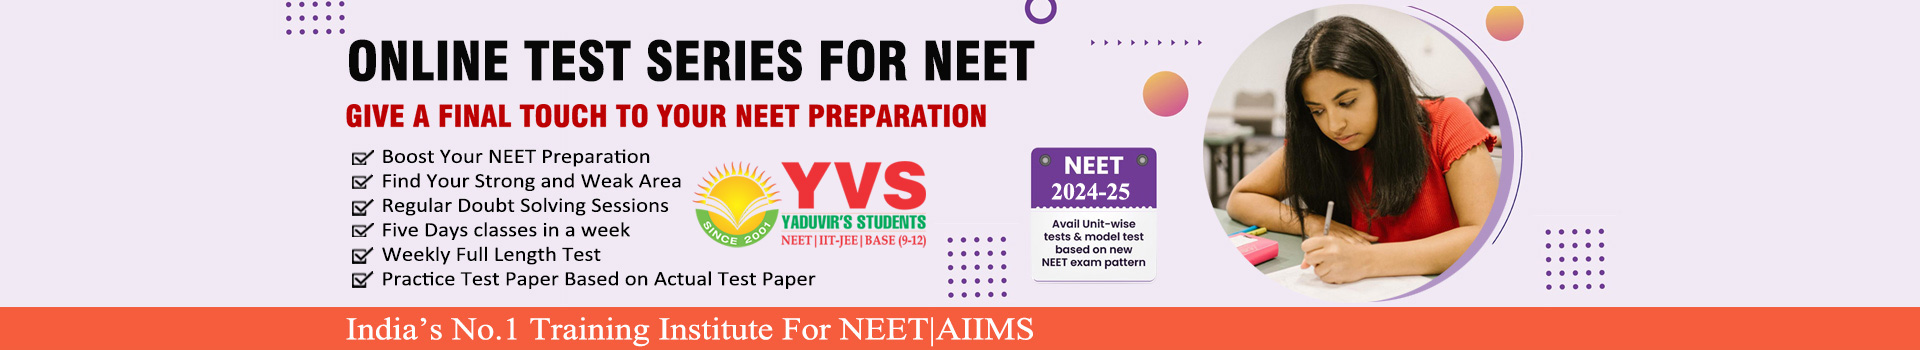 Online Test Series For NEET Exam